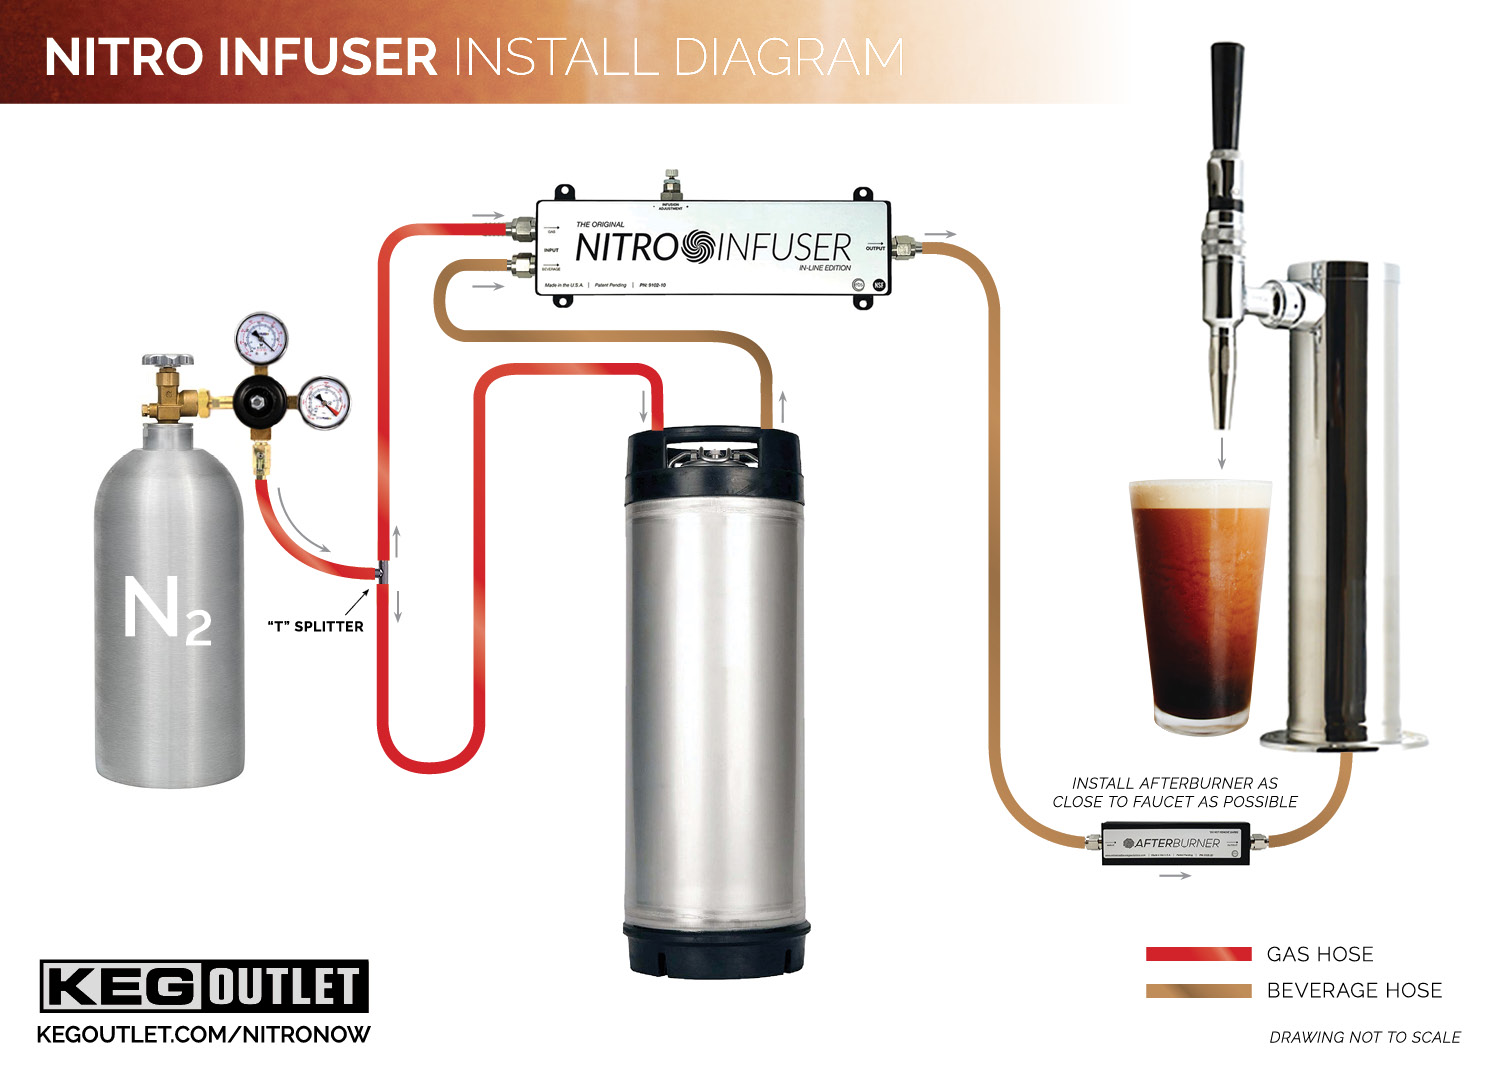 https://www.coldbrewavenue.com/media/uploads_ckeditor/diagrams/nitro-infuser-with-afterburner-installation-diagram.jpg